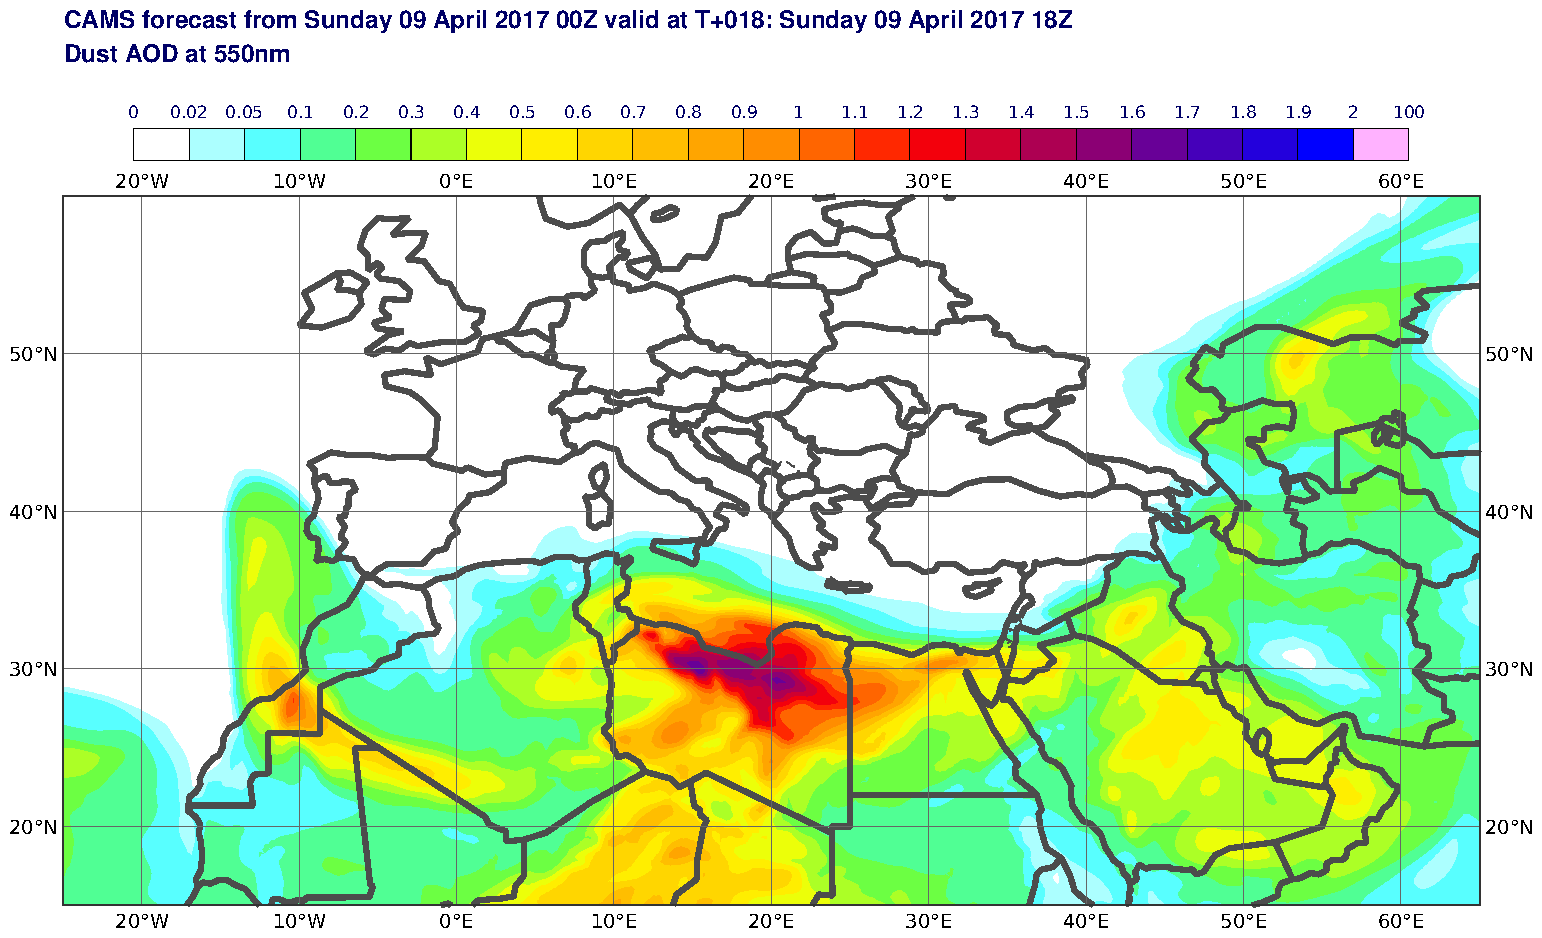 Dust AOD at 550nm valid at T18 - 2017-04-09 18:00